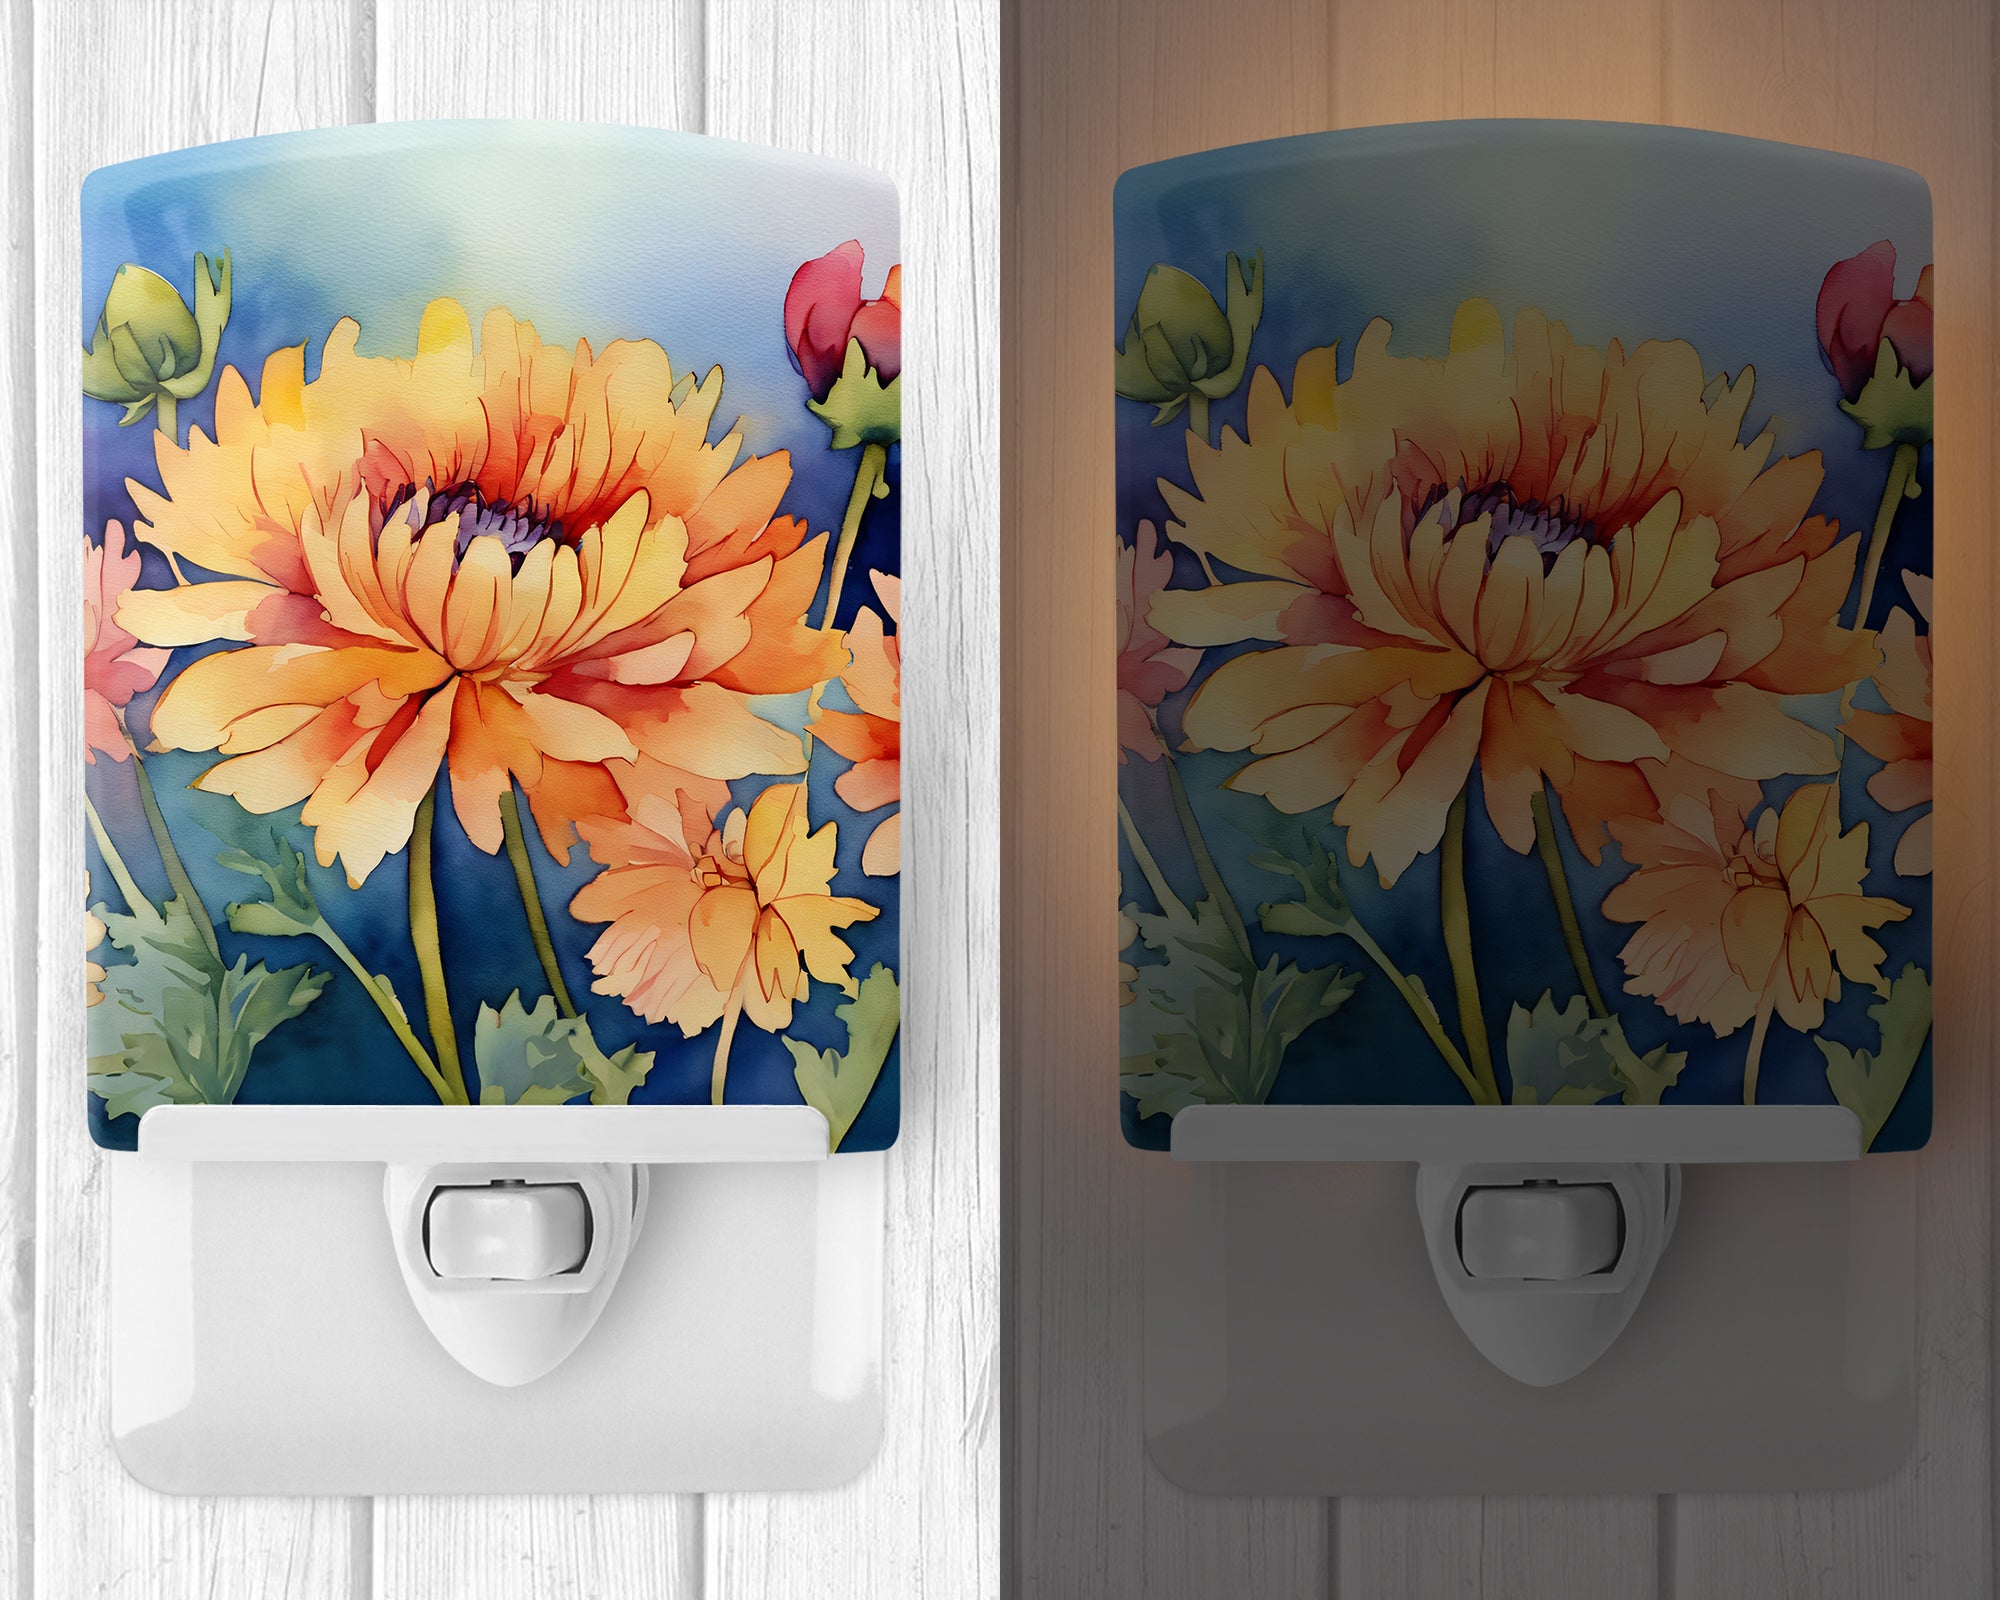 Buy this Chrysanthemums in Watercolor Ceramic Night Light